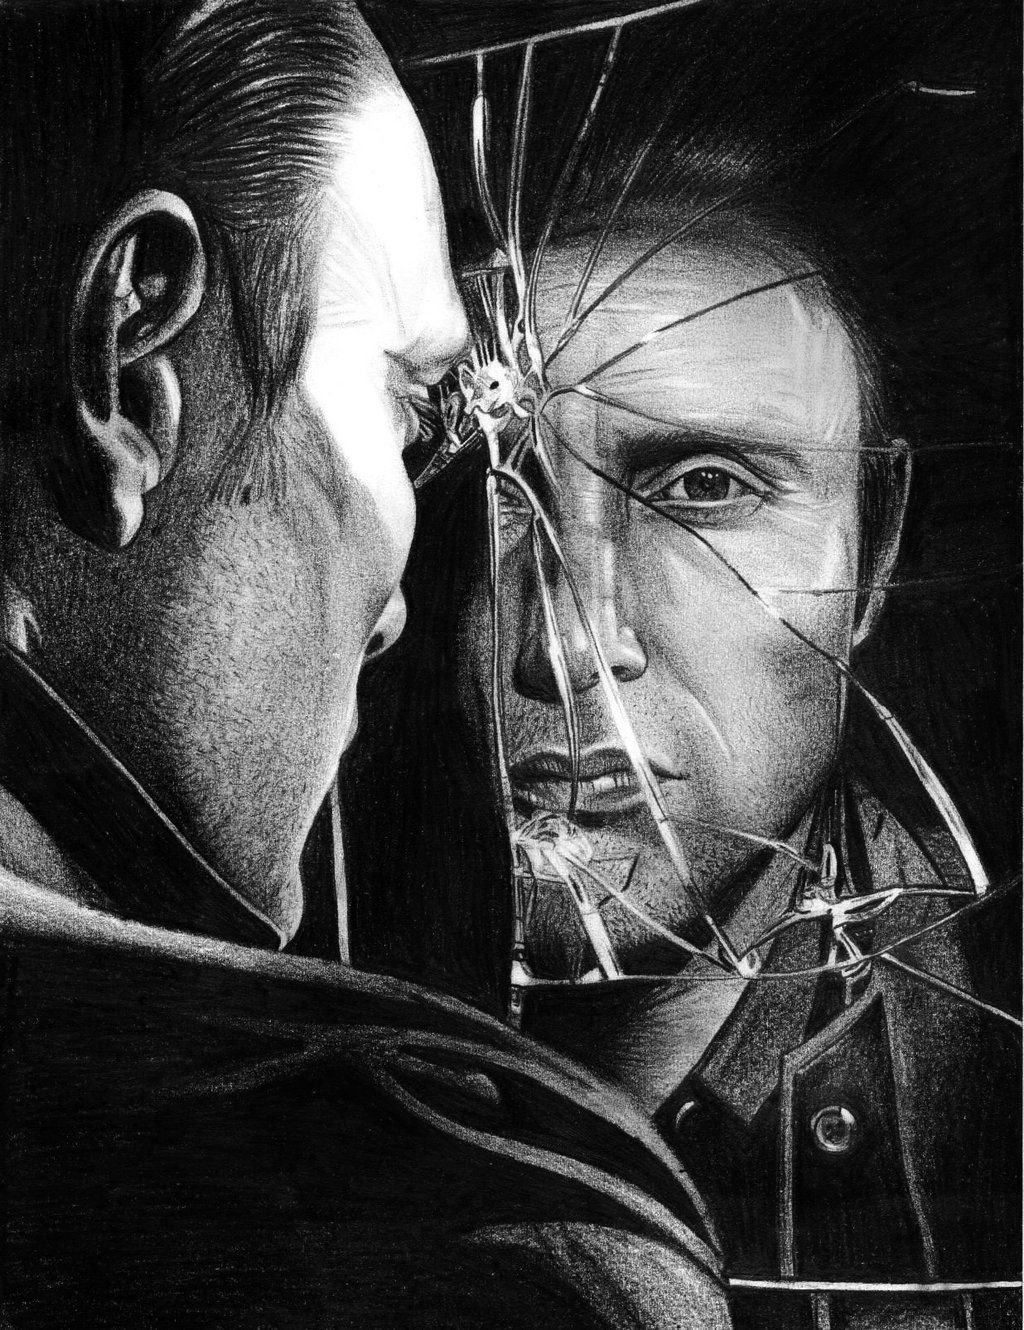 Разбитые отражения фф. Лицо в разбитом зеркале. Отражение мужчины в разбитом зеркале. Мужское лицо разбитом зеркале. Отражение в разбитом зеркале арт.